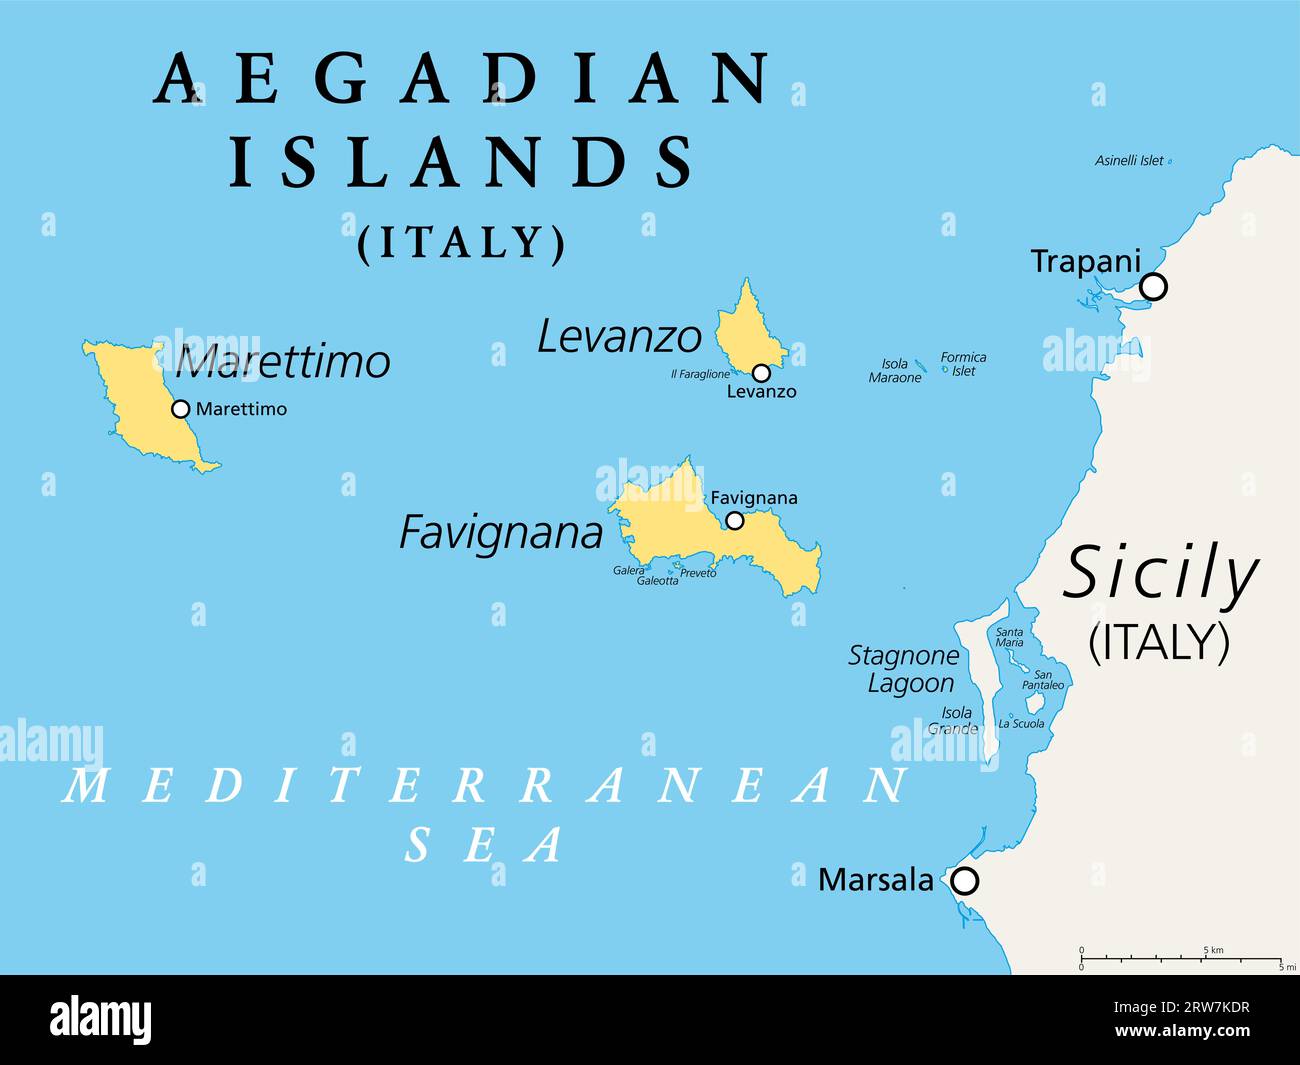 Aegadian Islands, Favignana, Levanzo, Marettimo, political map. Group of 5 small mountainous islands in the Mediterranean Sea off the coast of Sicily. Stock Photo